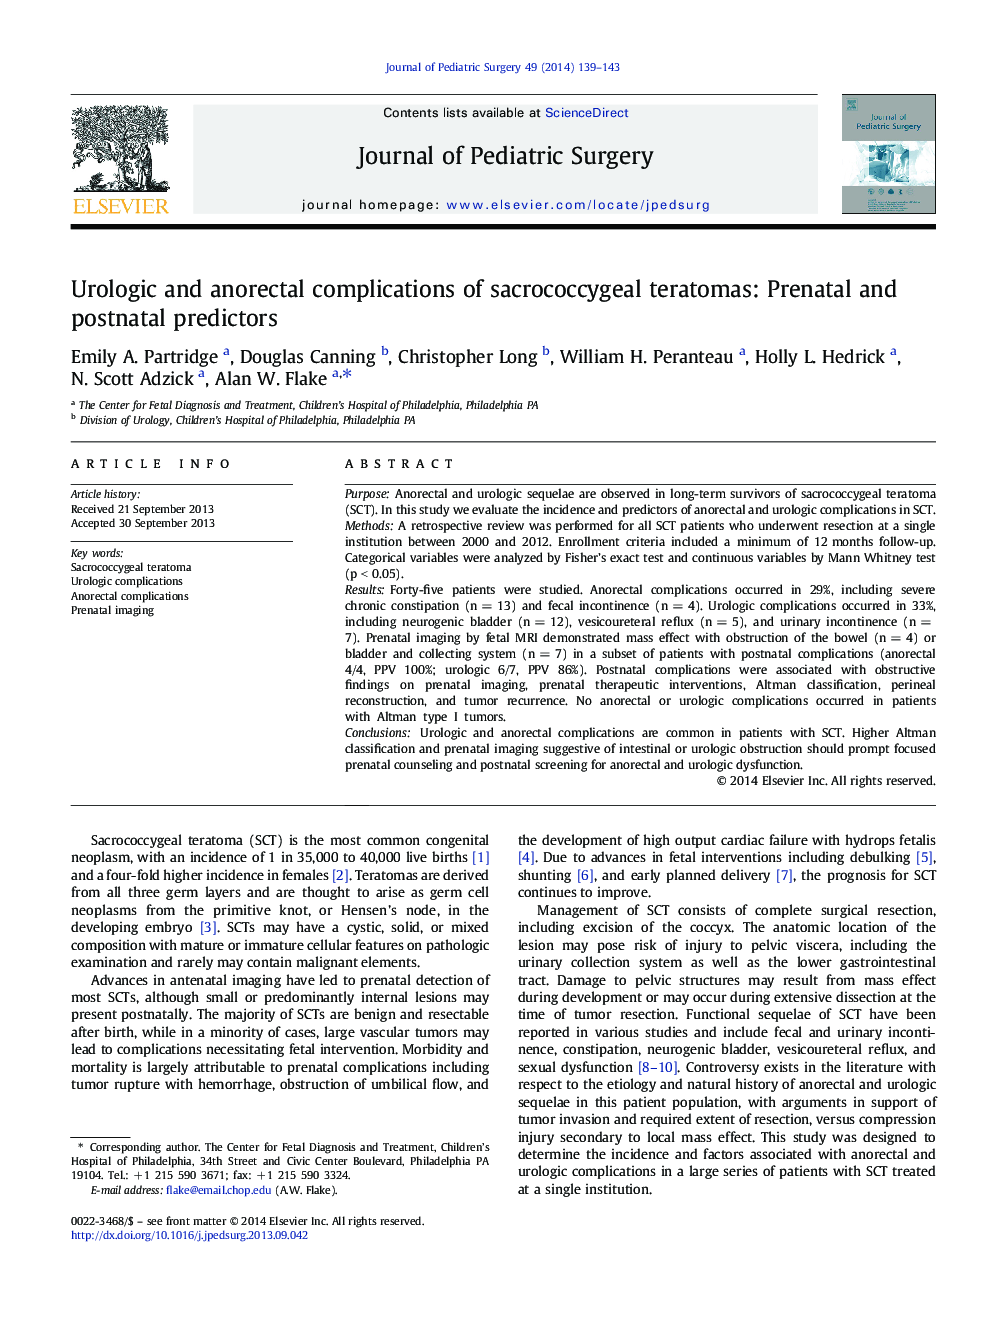 Urologic and anorectal complications of sacrococcygeal teratomas: Prenatal and postnatal predictors